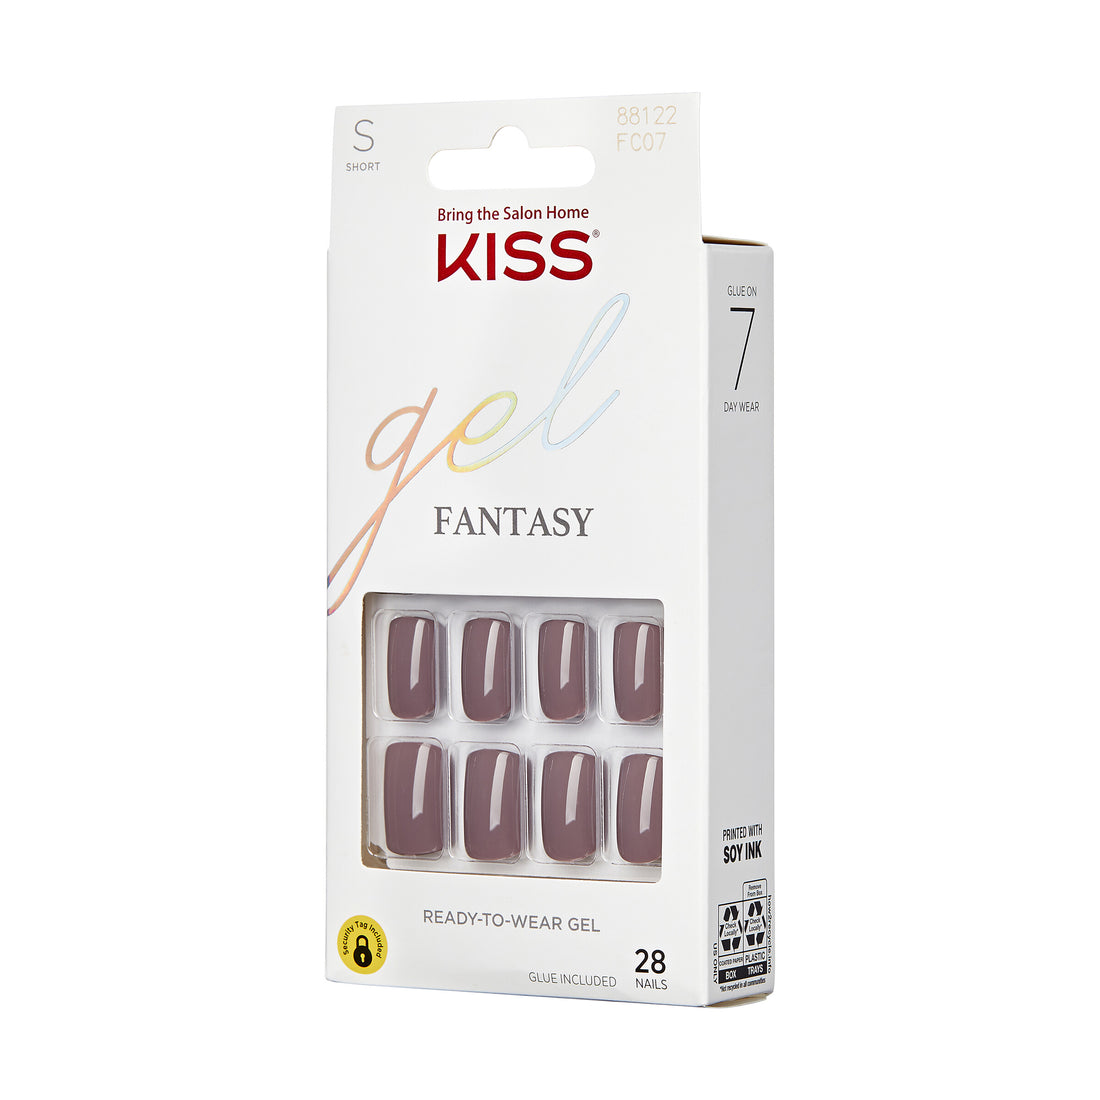 KISS Gel Fantasy Nails- Temporary Feels